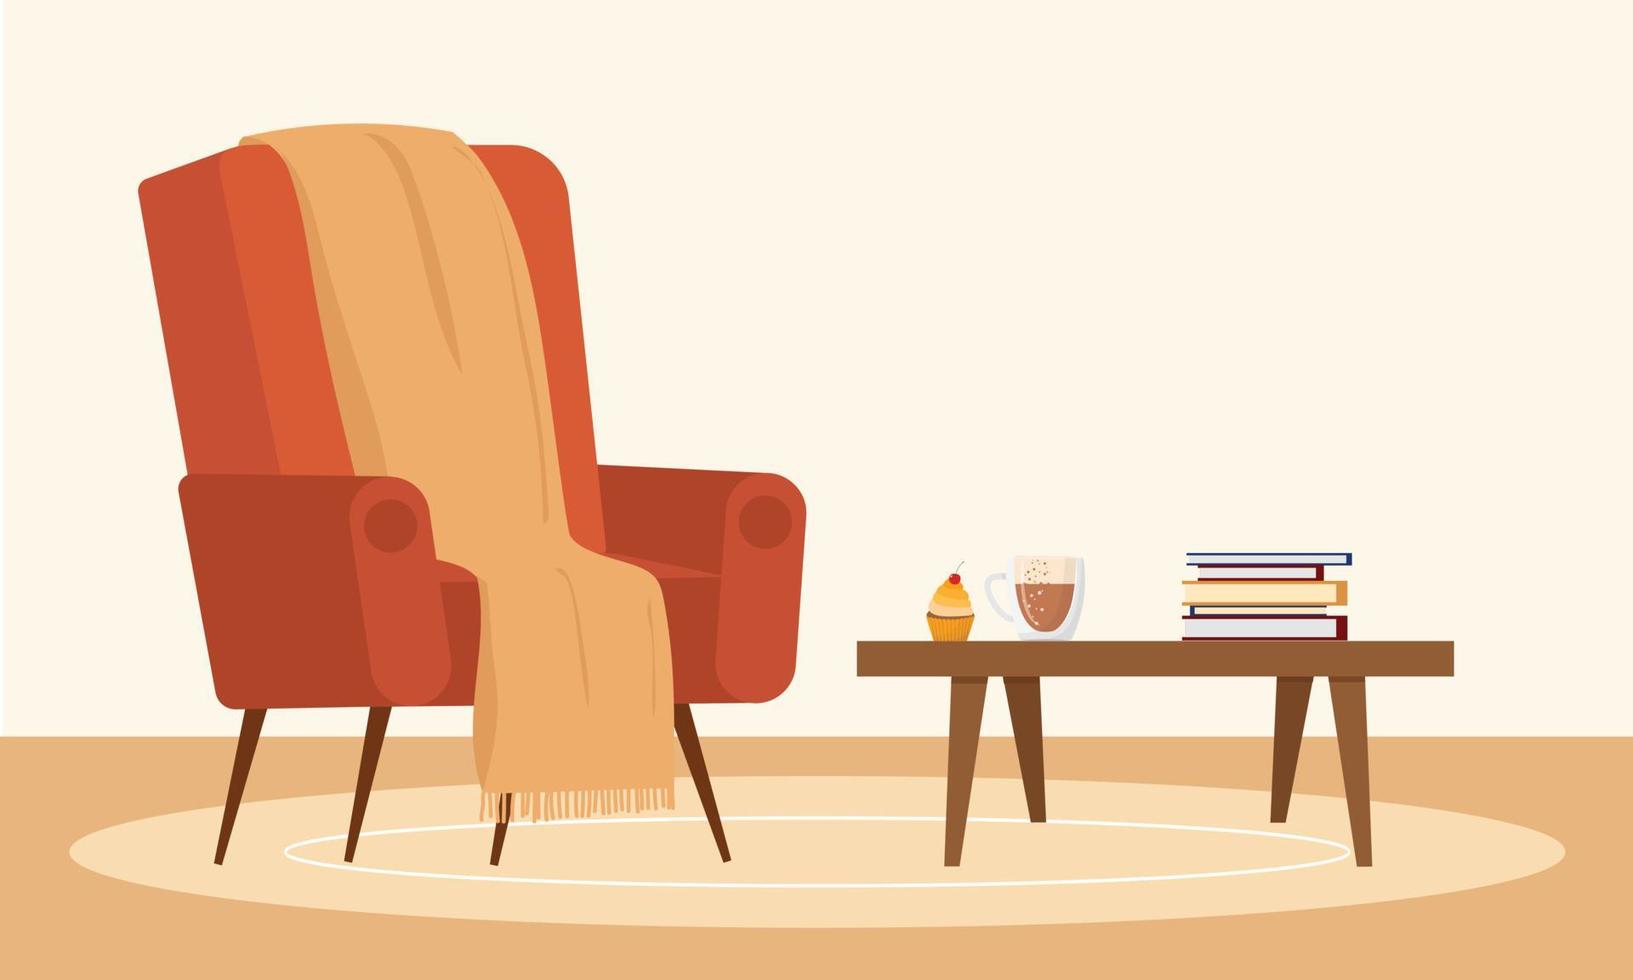 sillón acogedor con pled, libro, café y muffin. ilustración vectorial vector